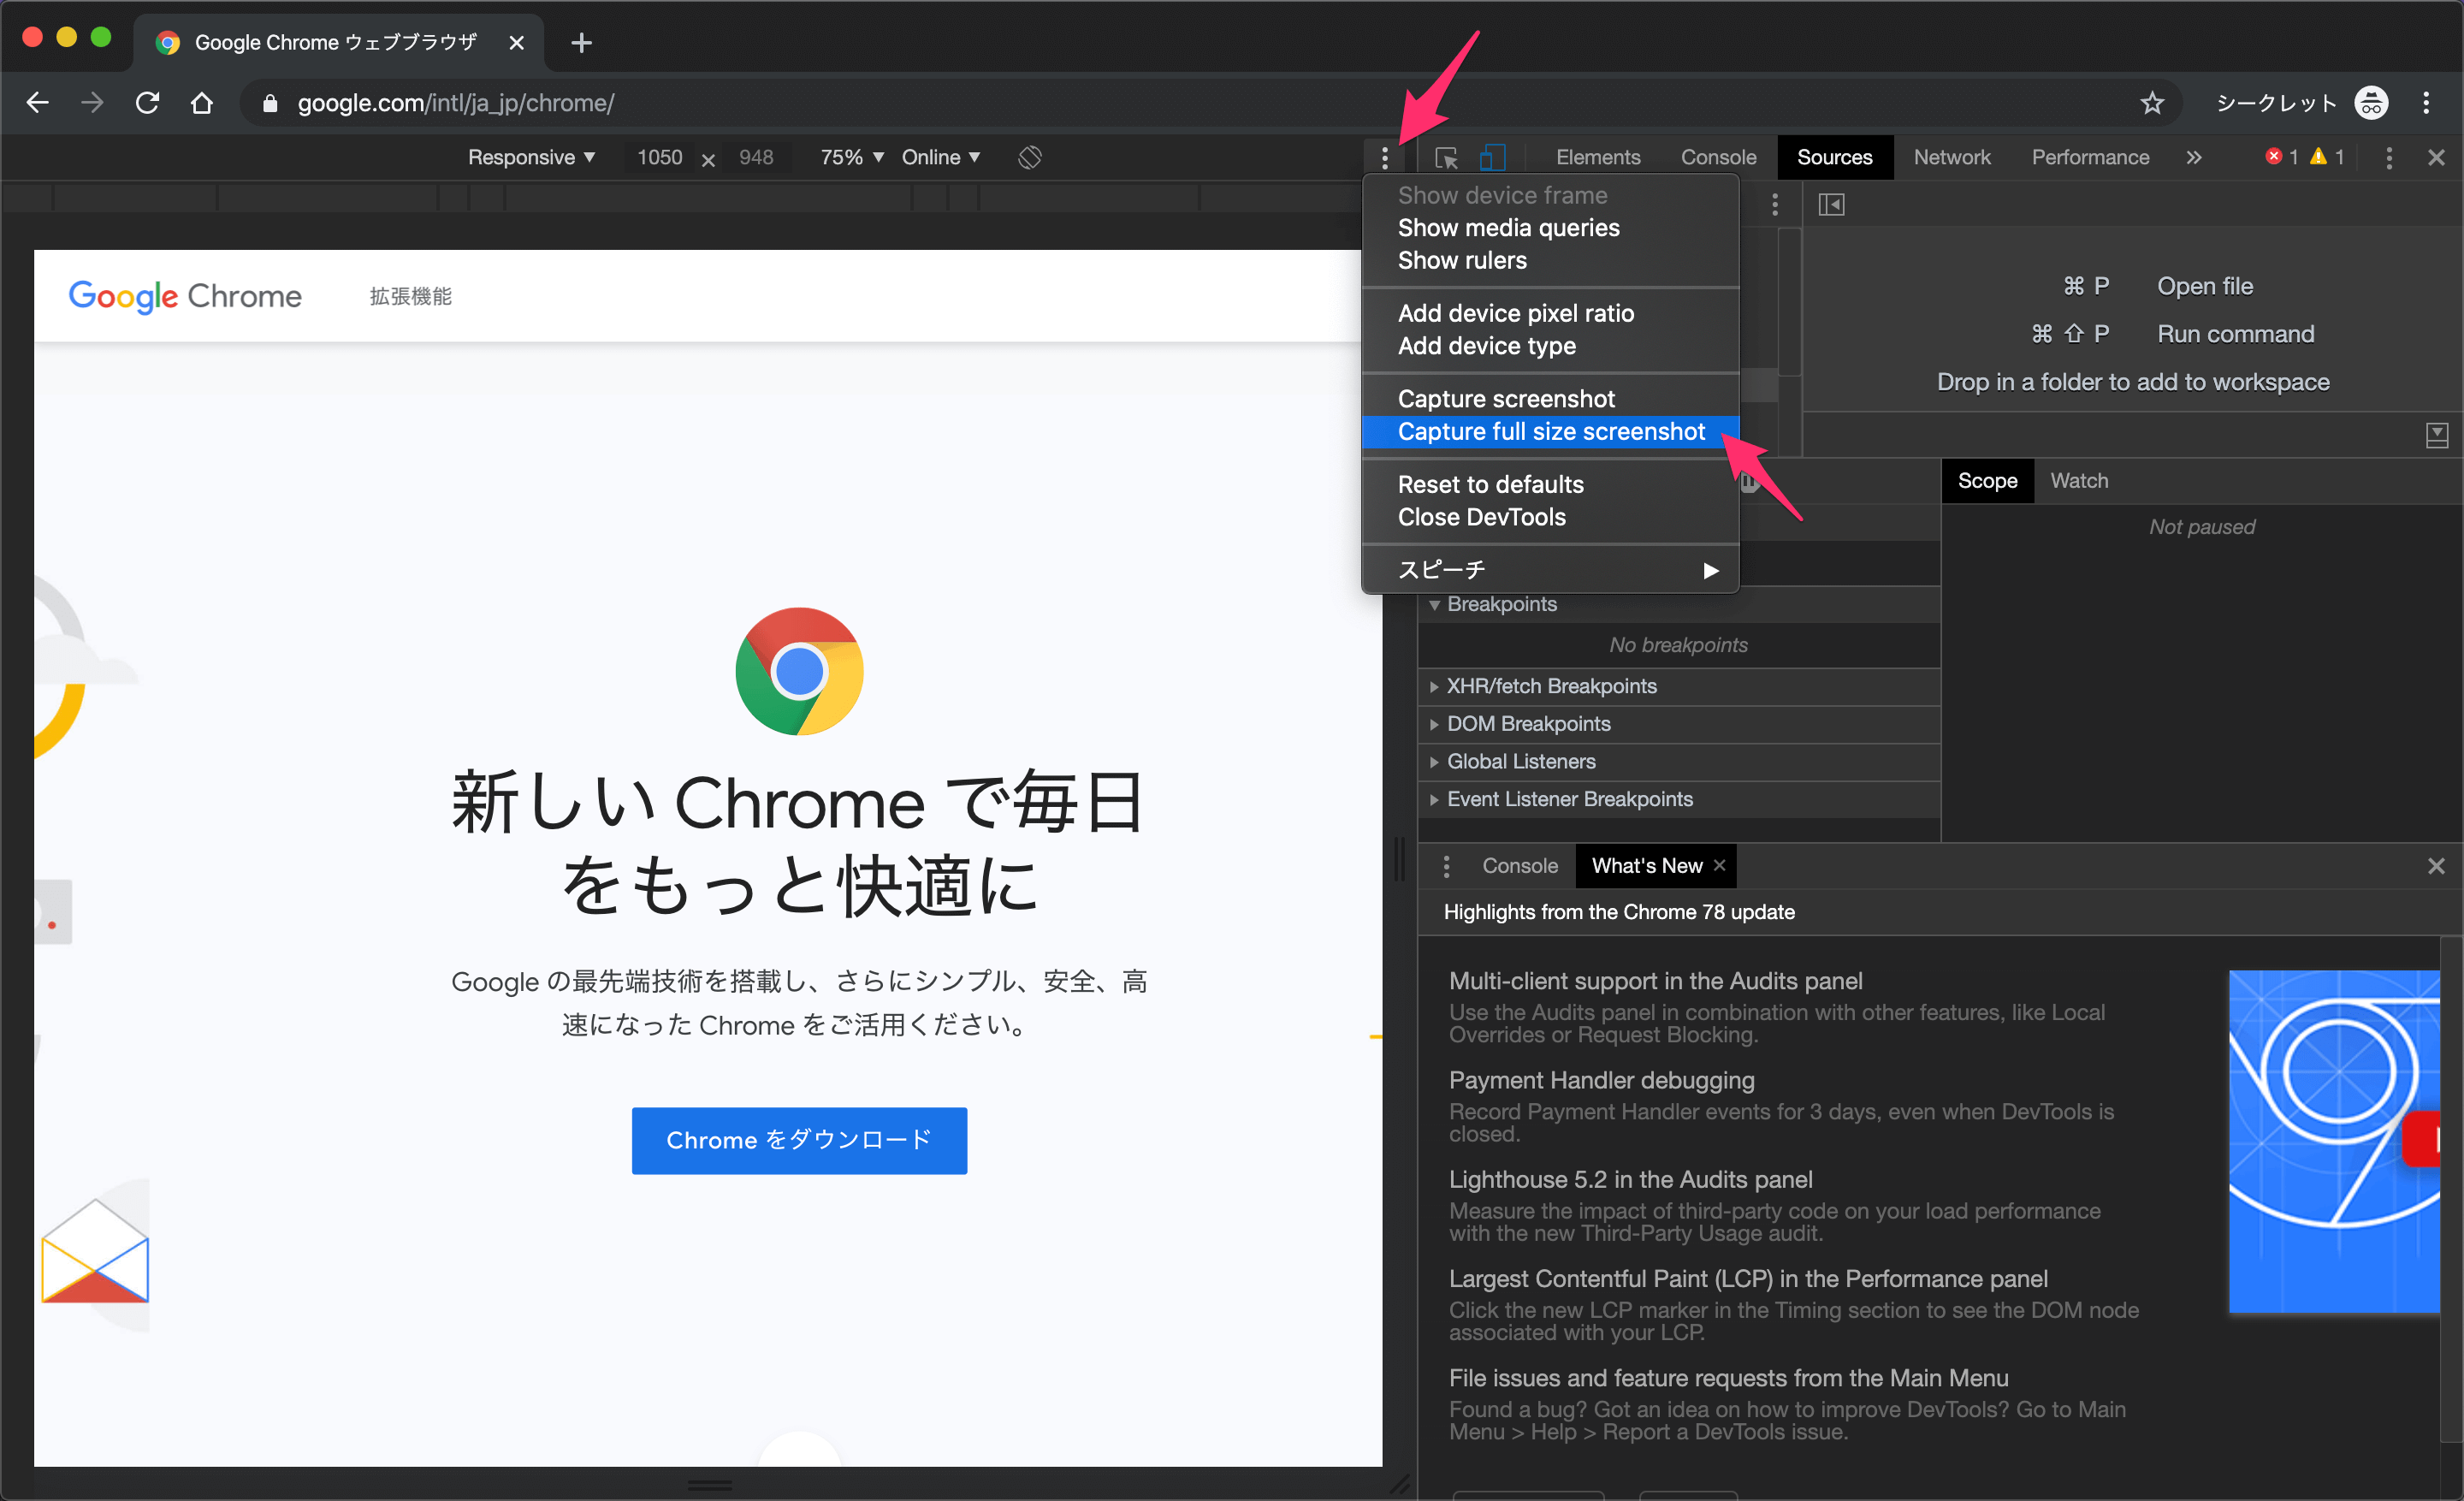 Chrome_Capture_full_size_screenshot.png